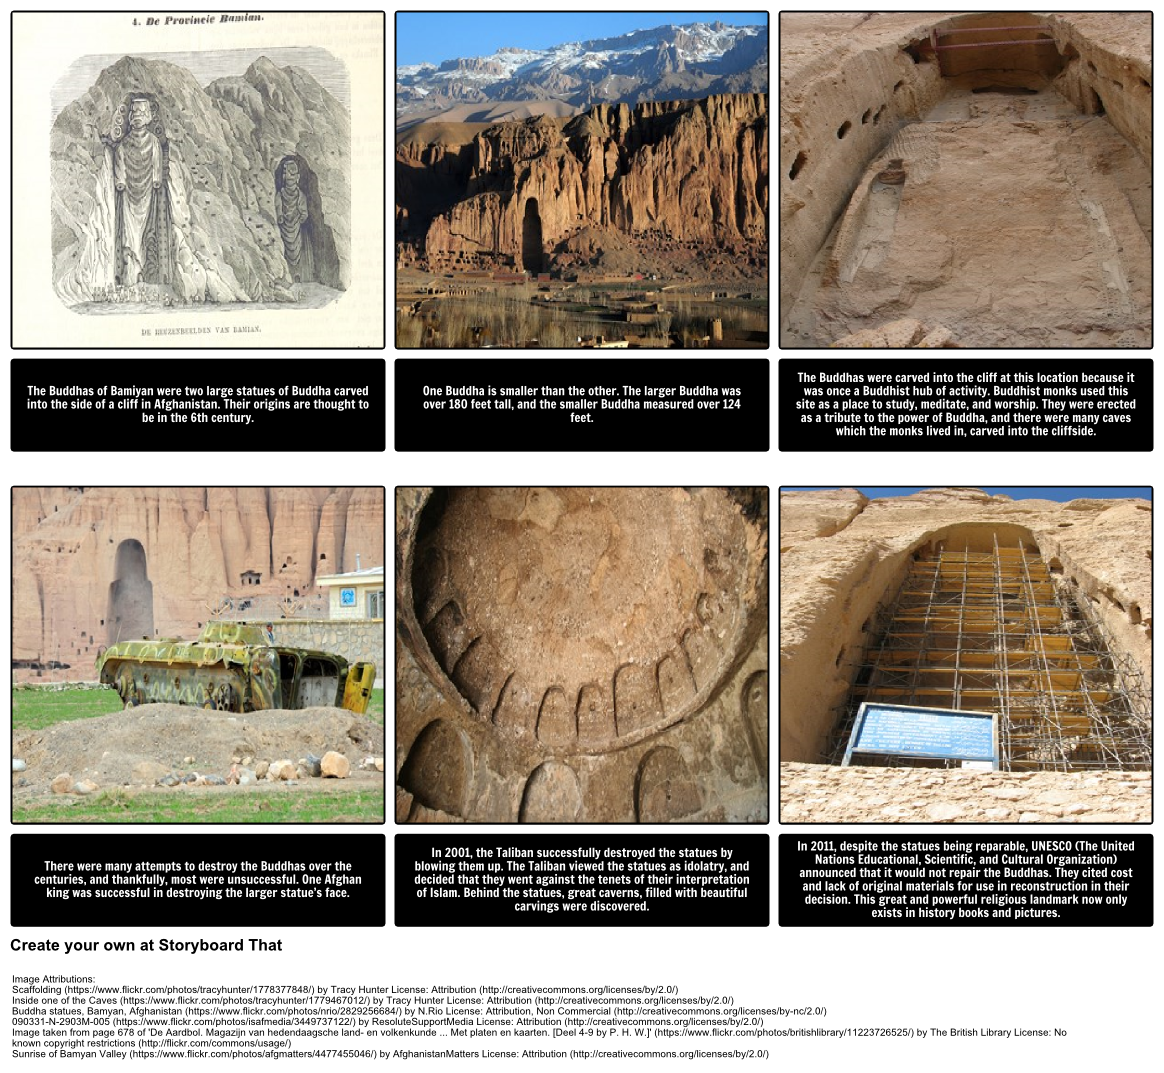 Connecting with the Theme of "Ozymandias": The Bamiyan Buddhas